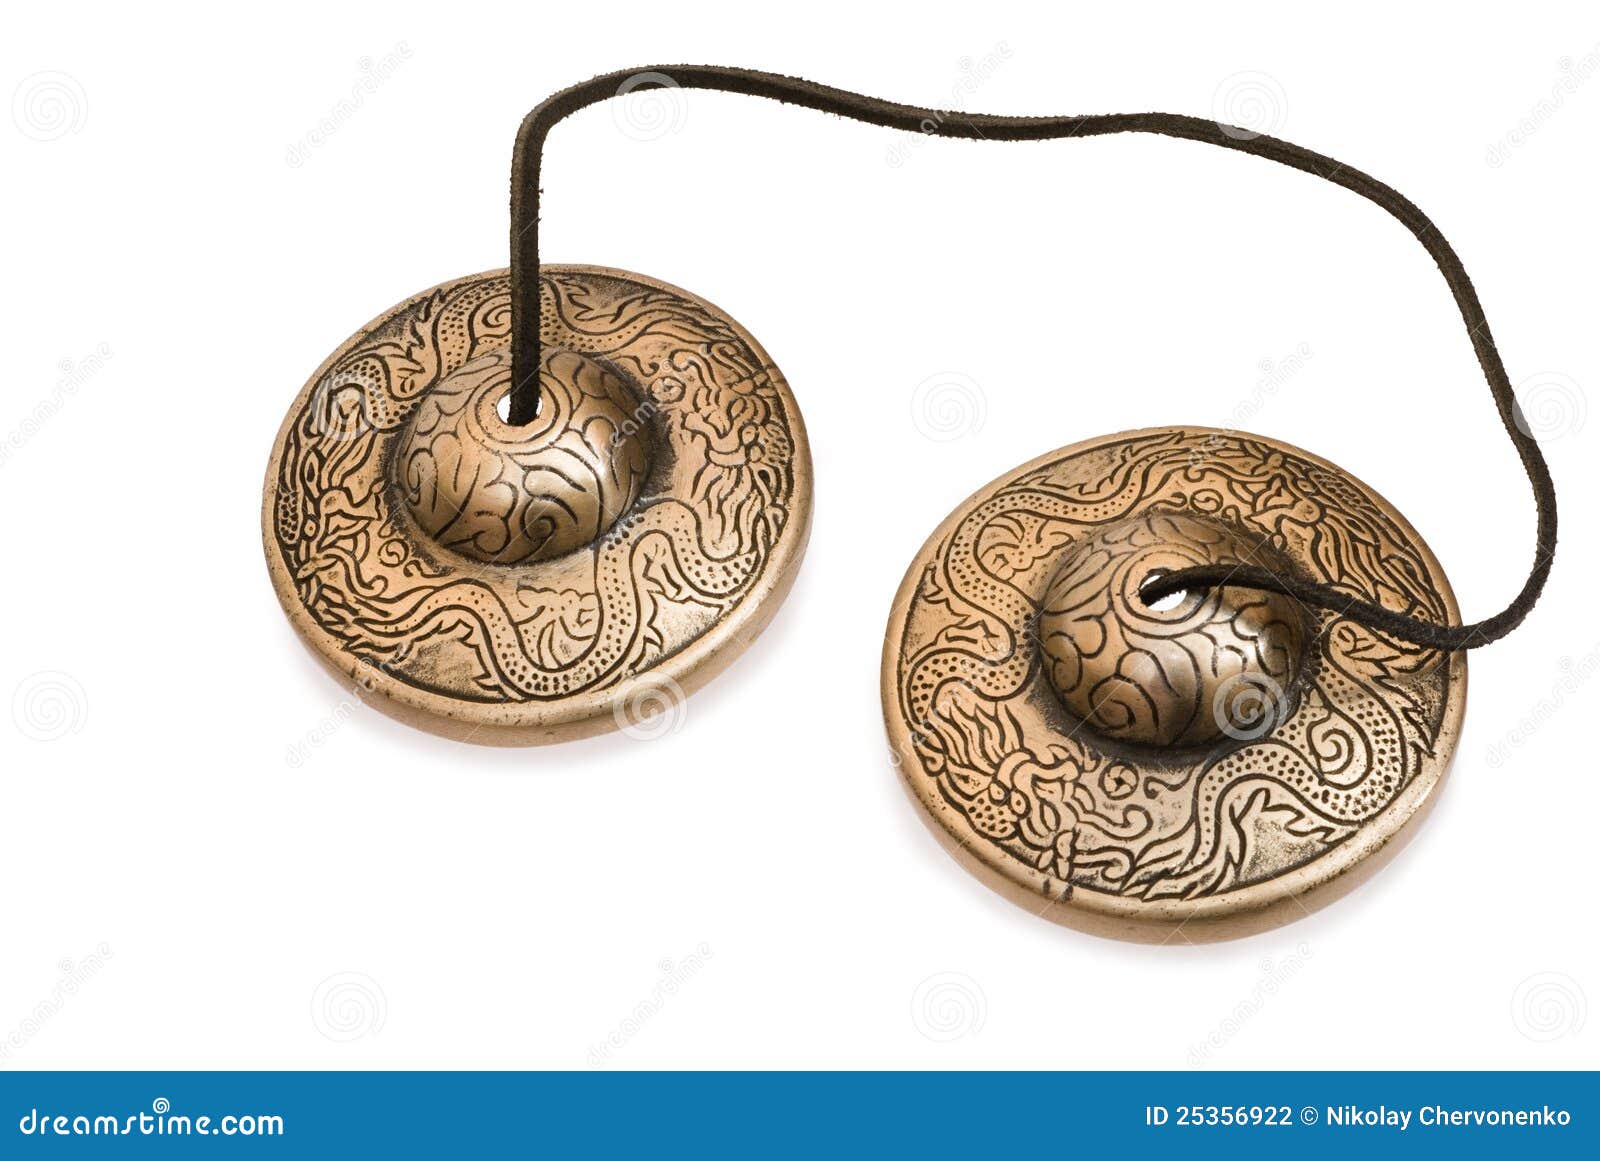 Tibetan bells stock photo. Image of health, asia, mantra - 25356922